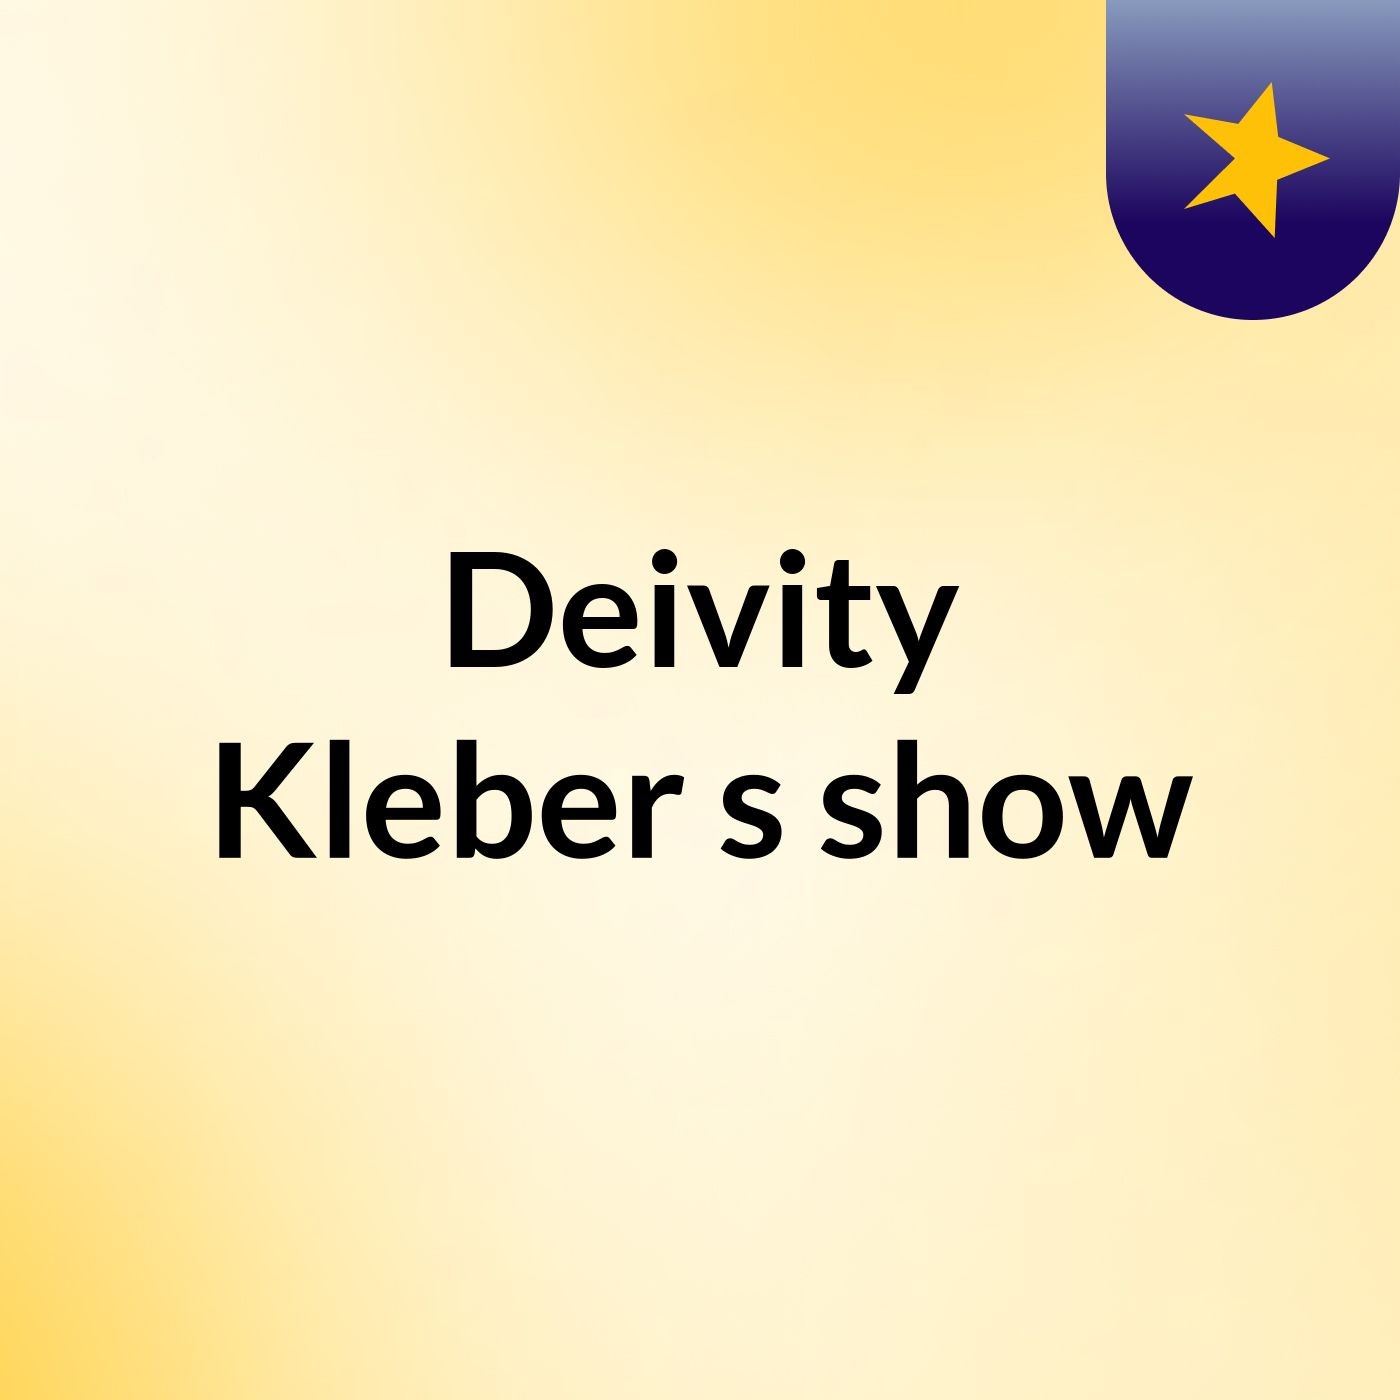 Deivity Kleber's show